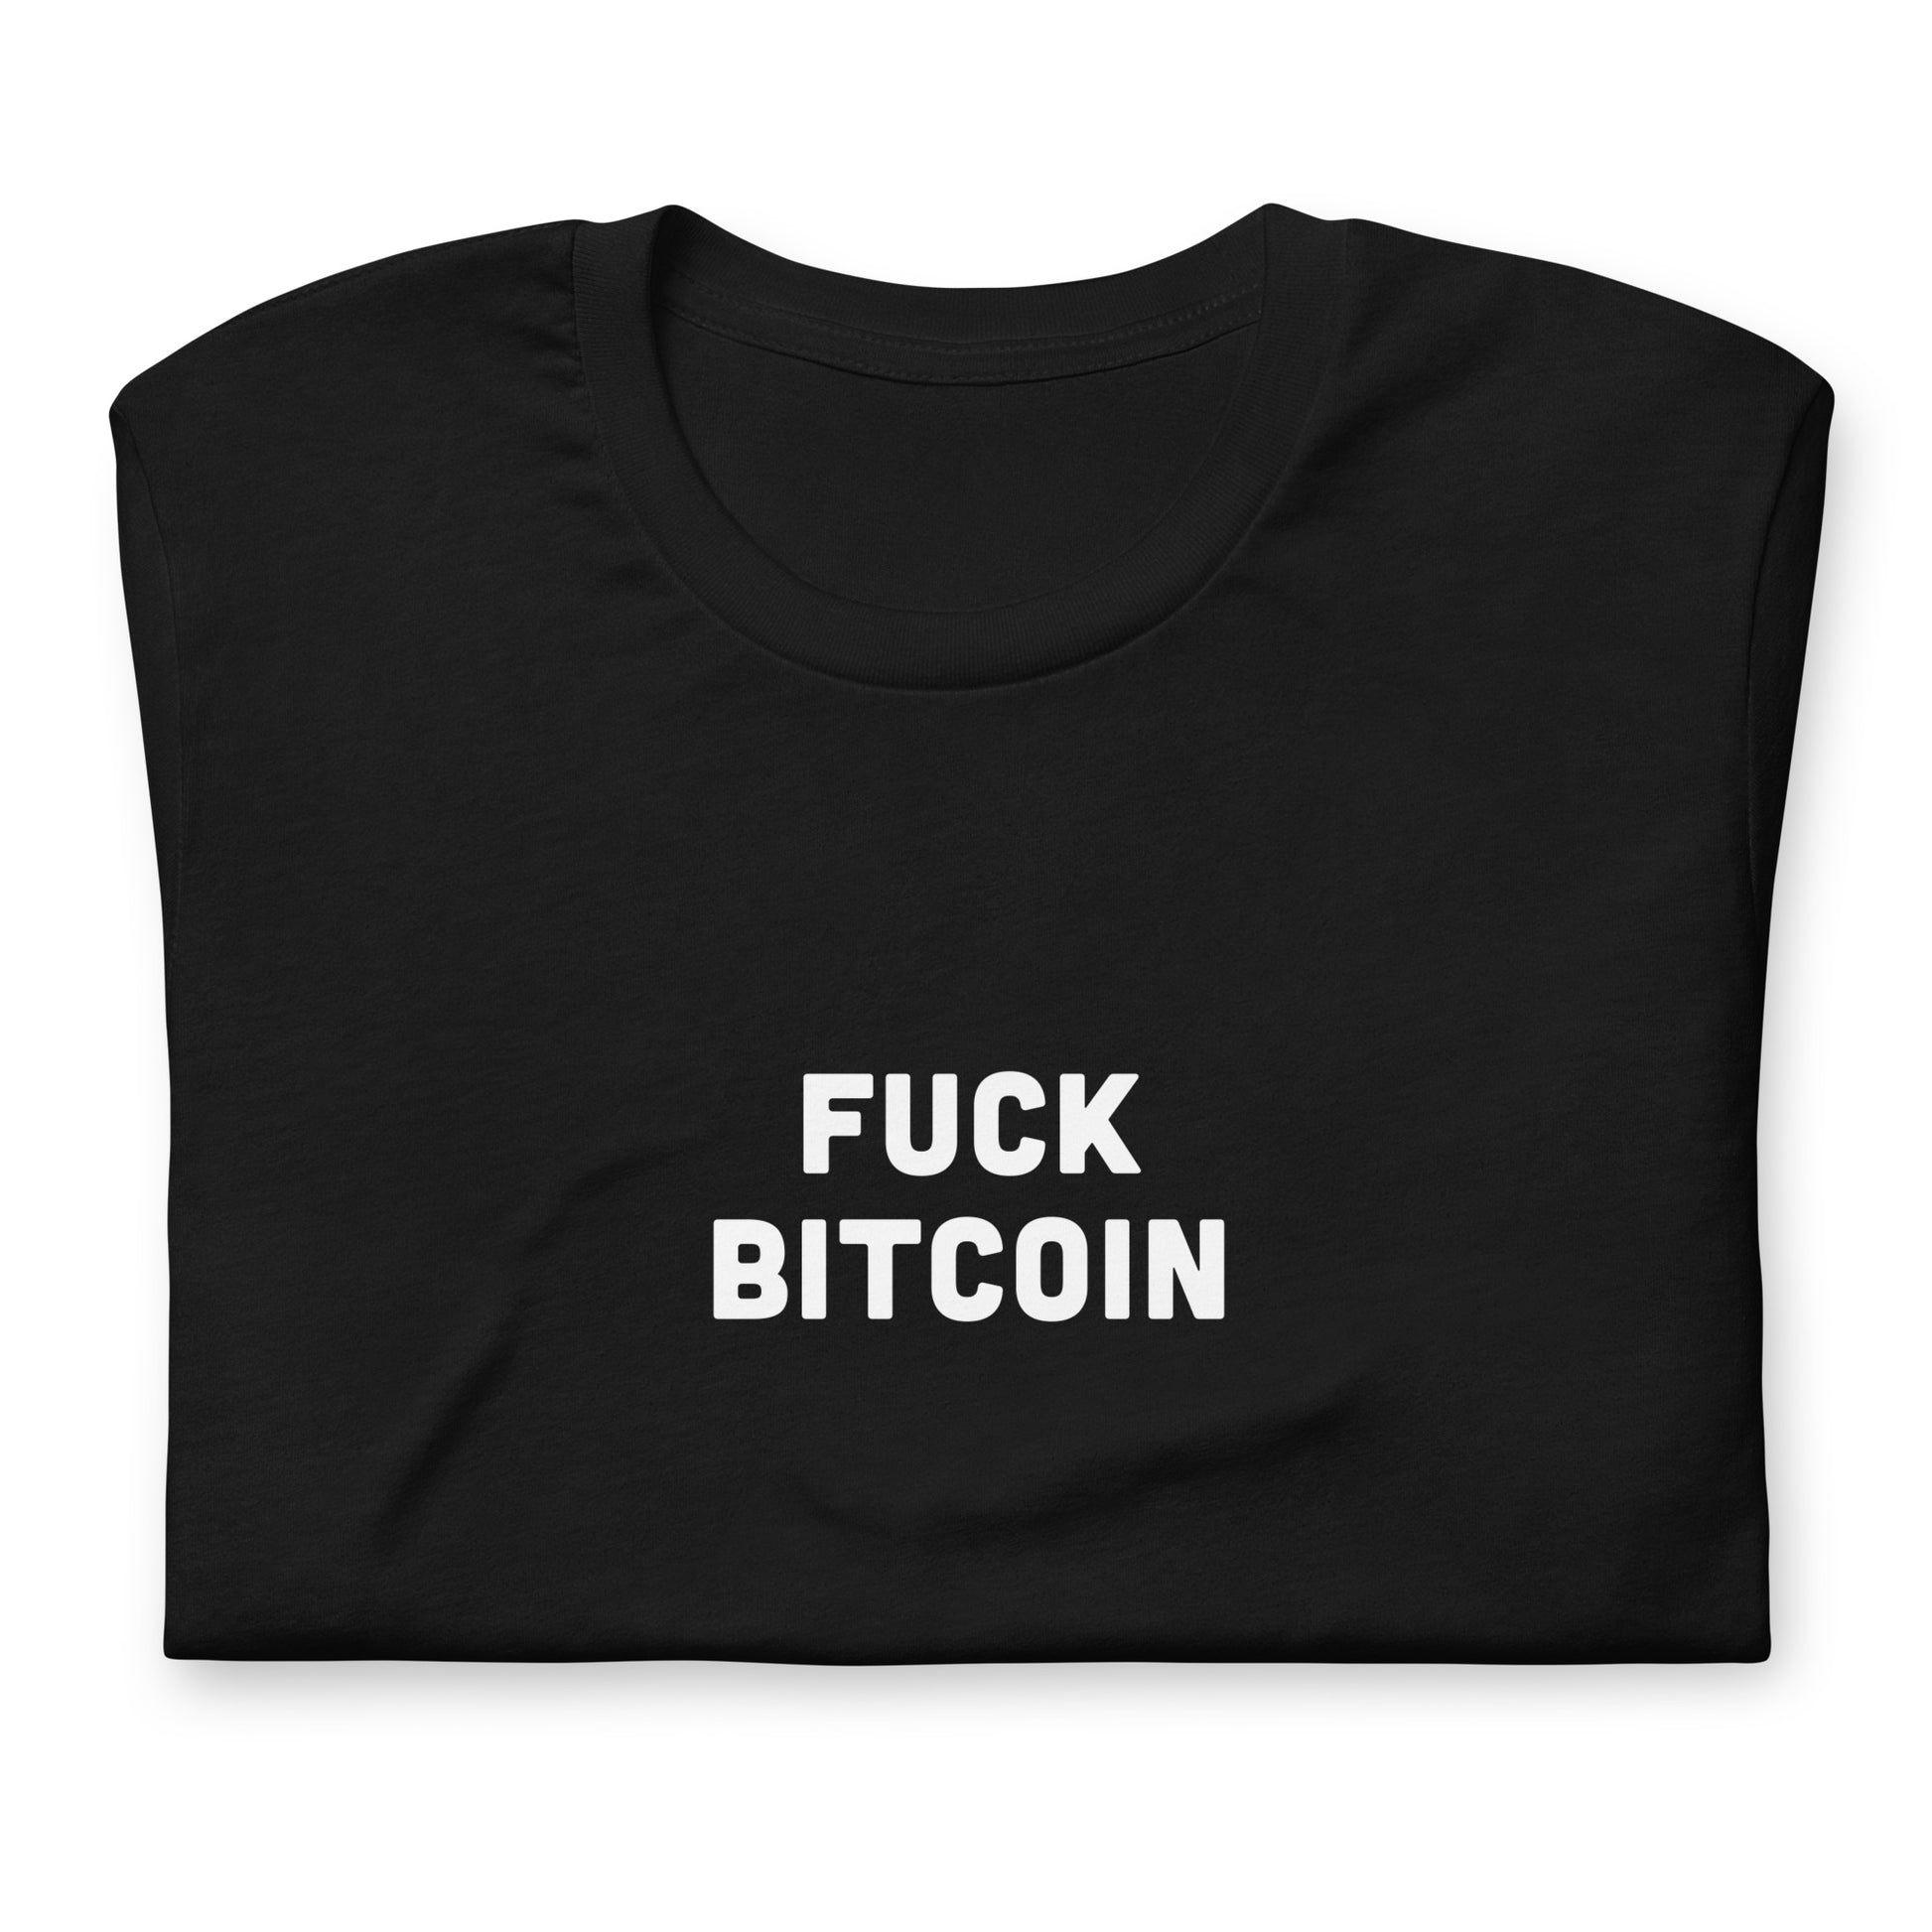 Fuck Bitcoin T-Shirt Size M Color Black